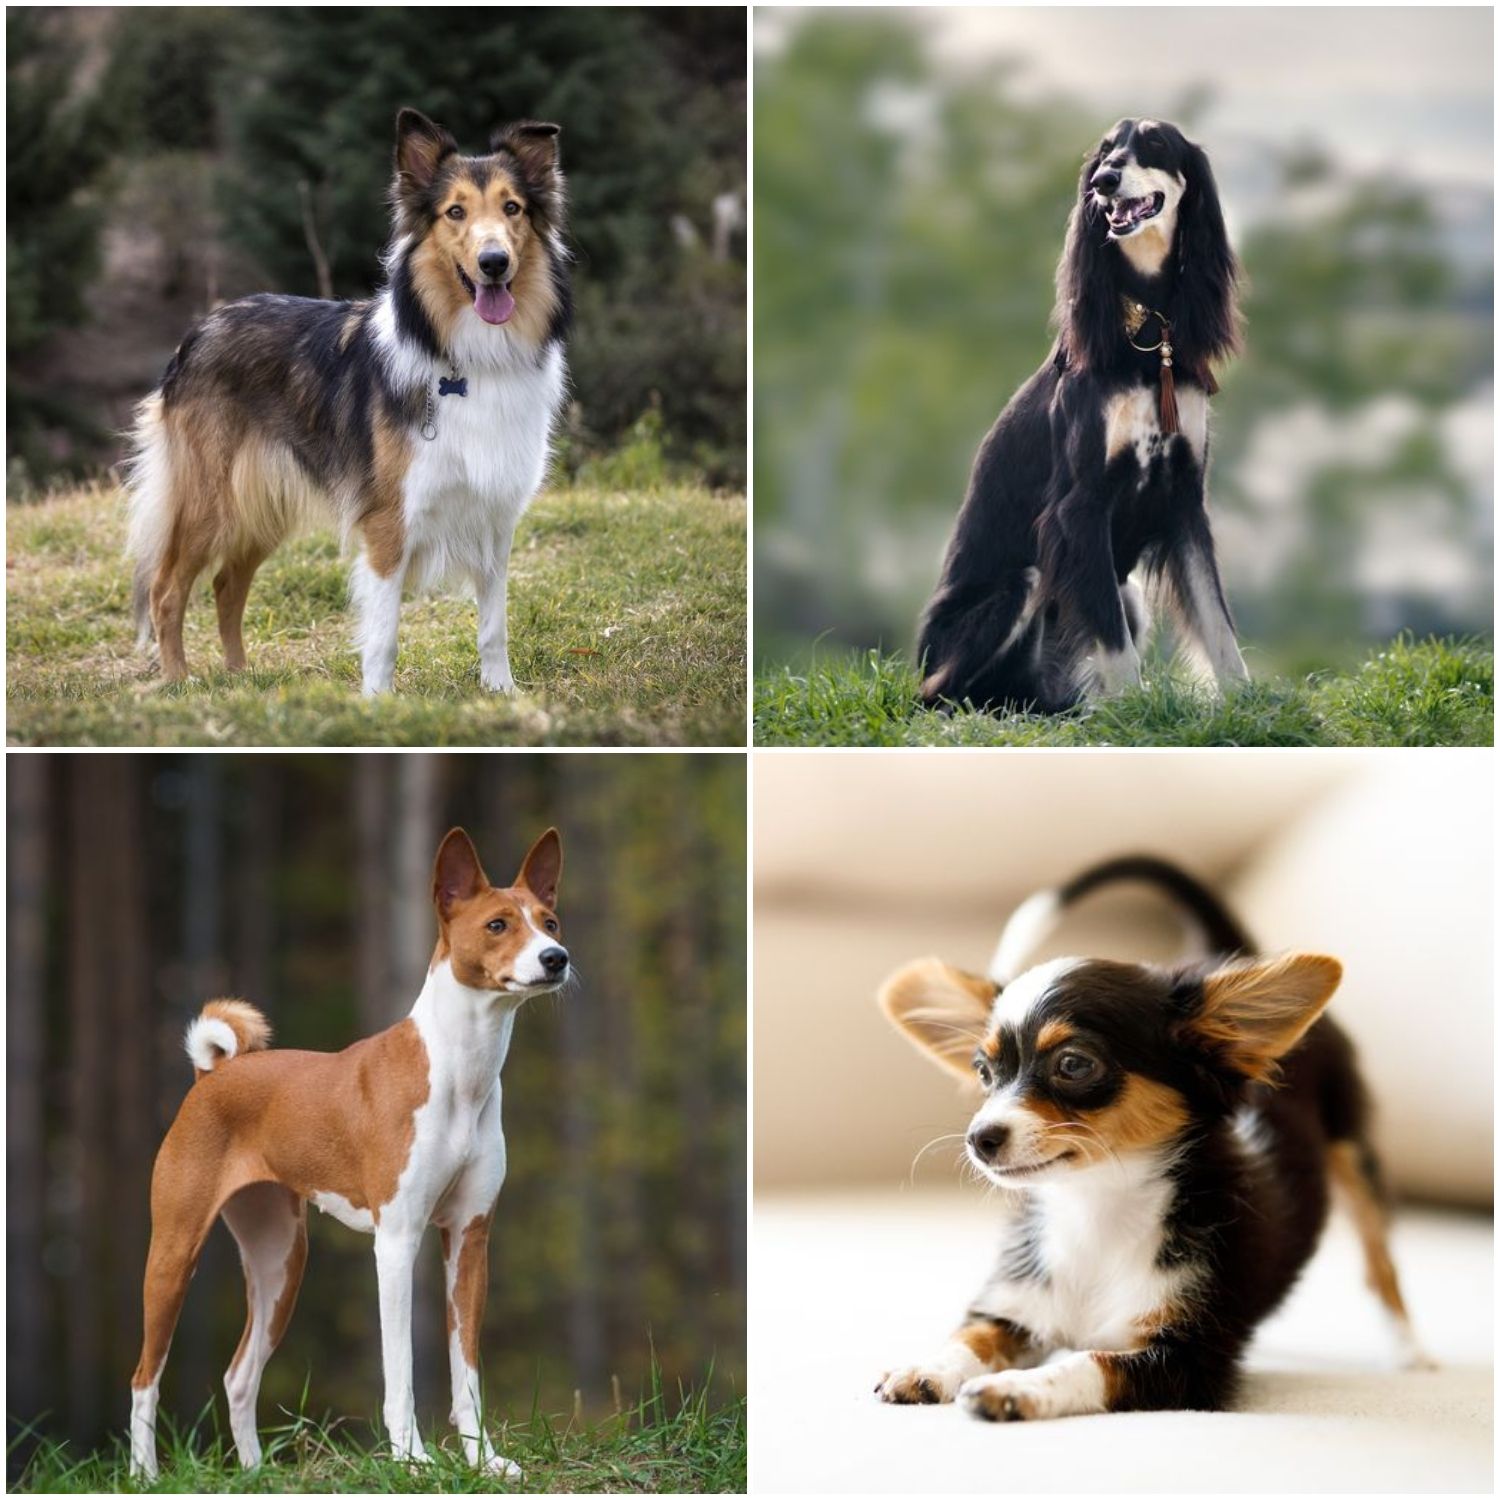 II. Characteristics of independent dog breeds